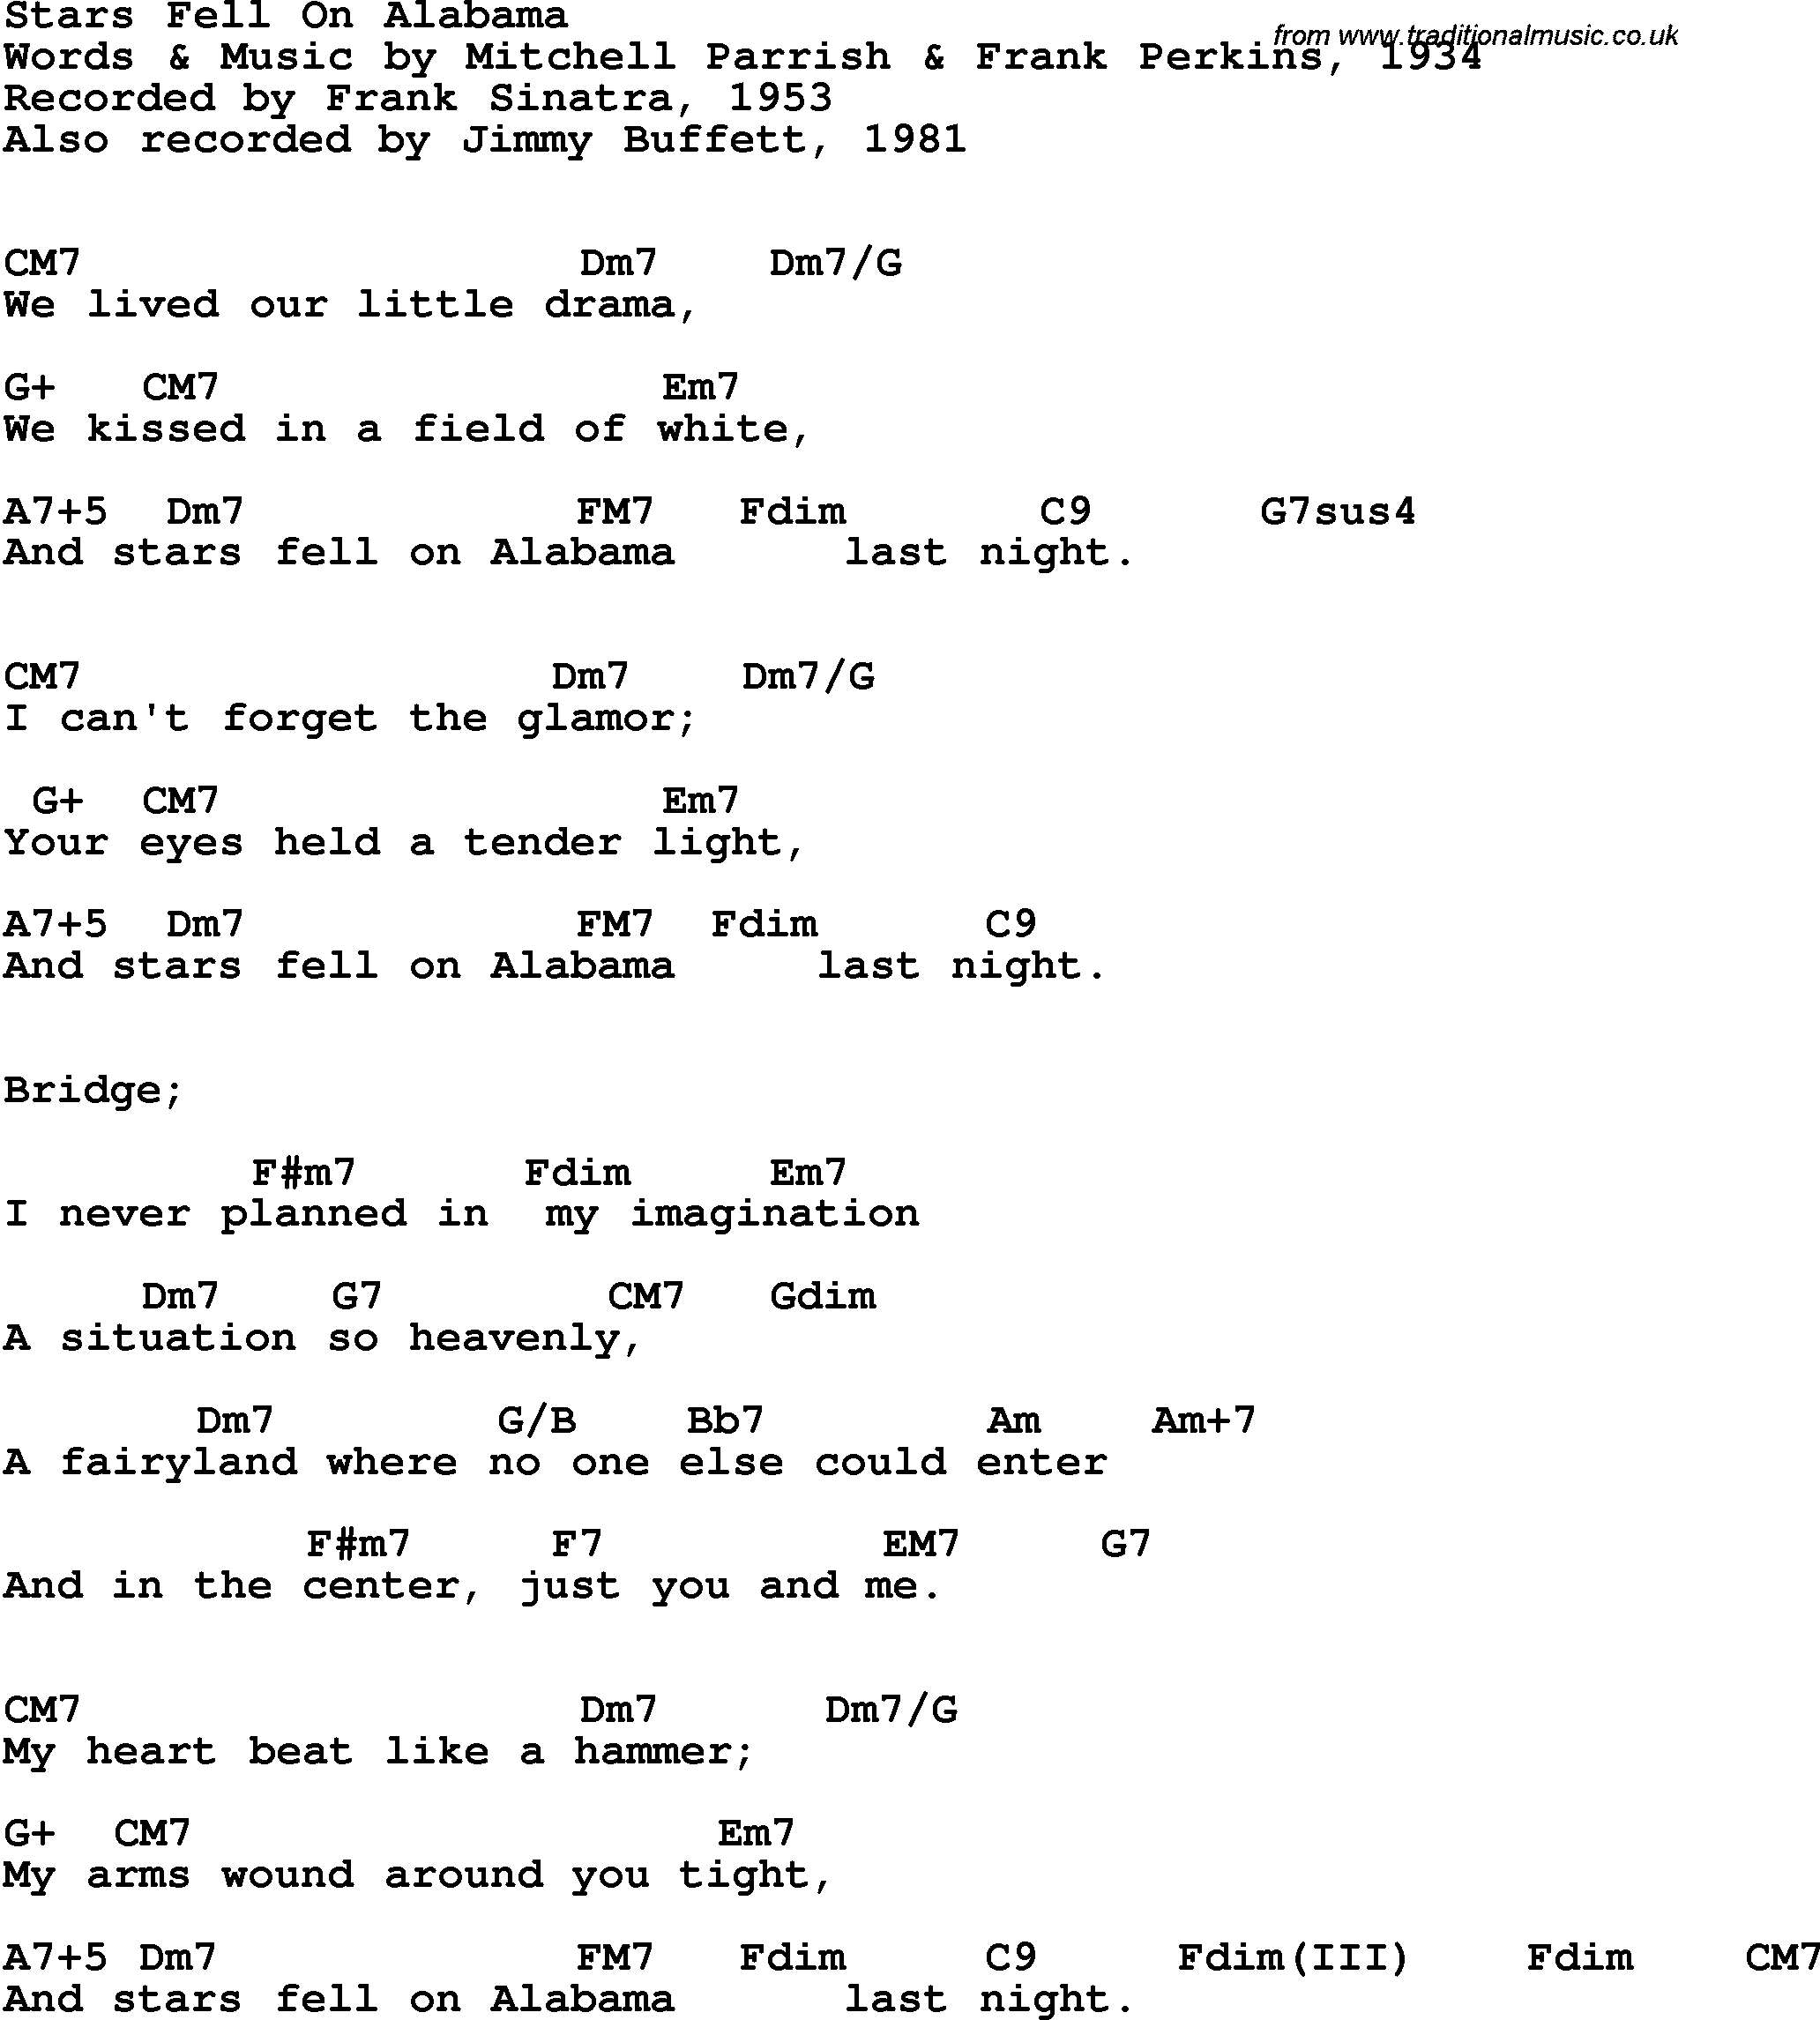 Song Lyrics with guitar chords for Stars Fell On Alabama - Frank Sinatra, 1935